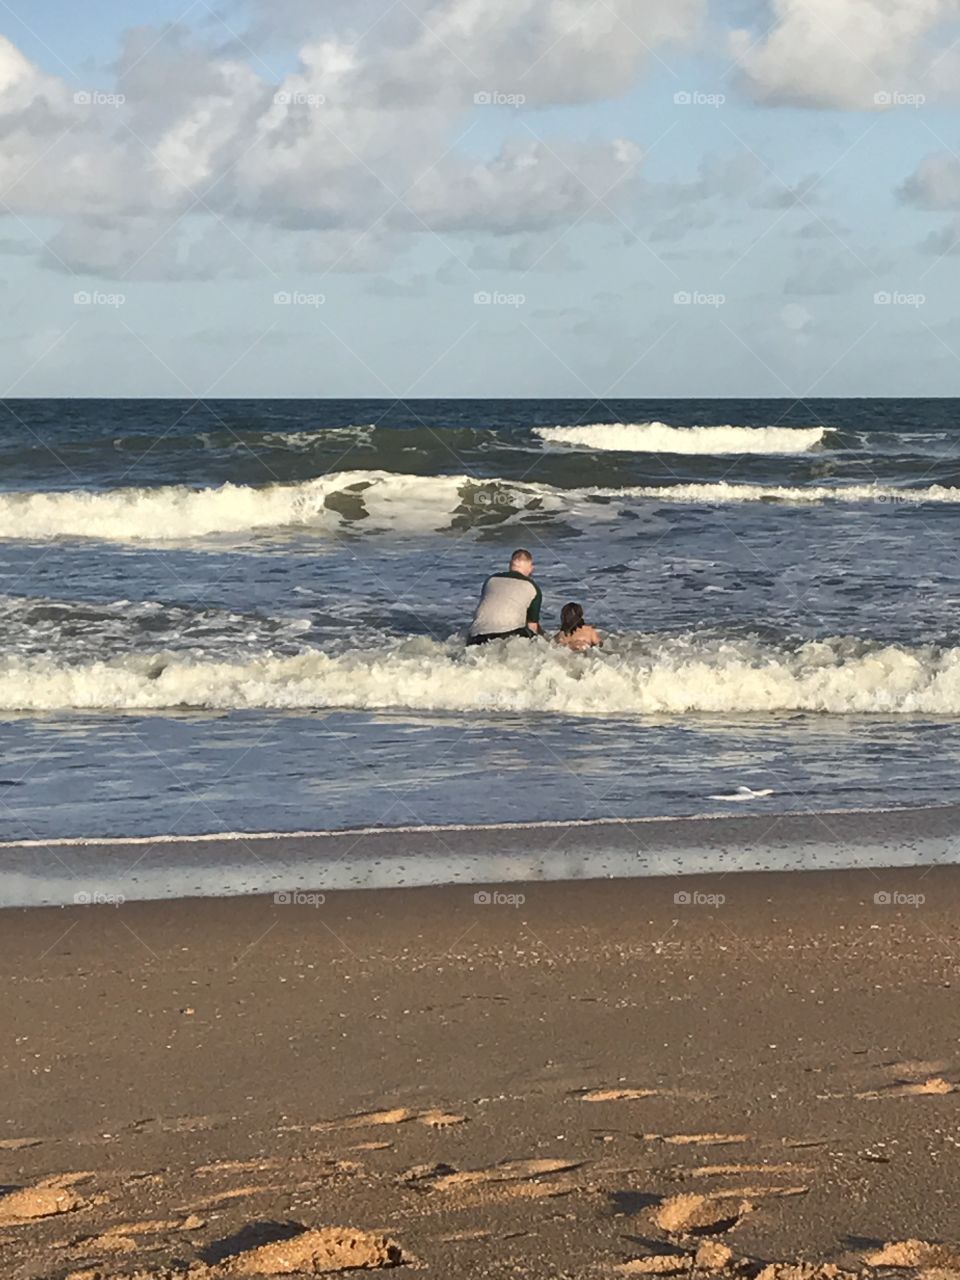 Florida surf lesson